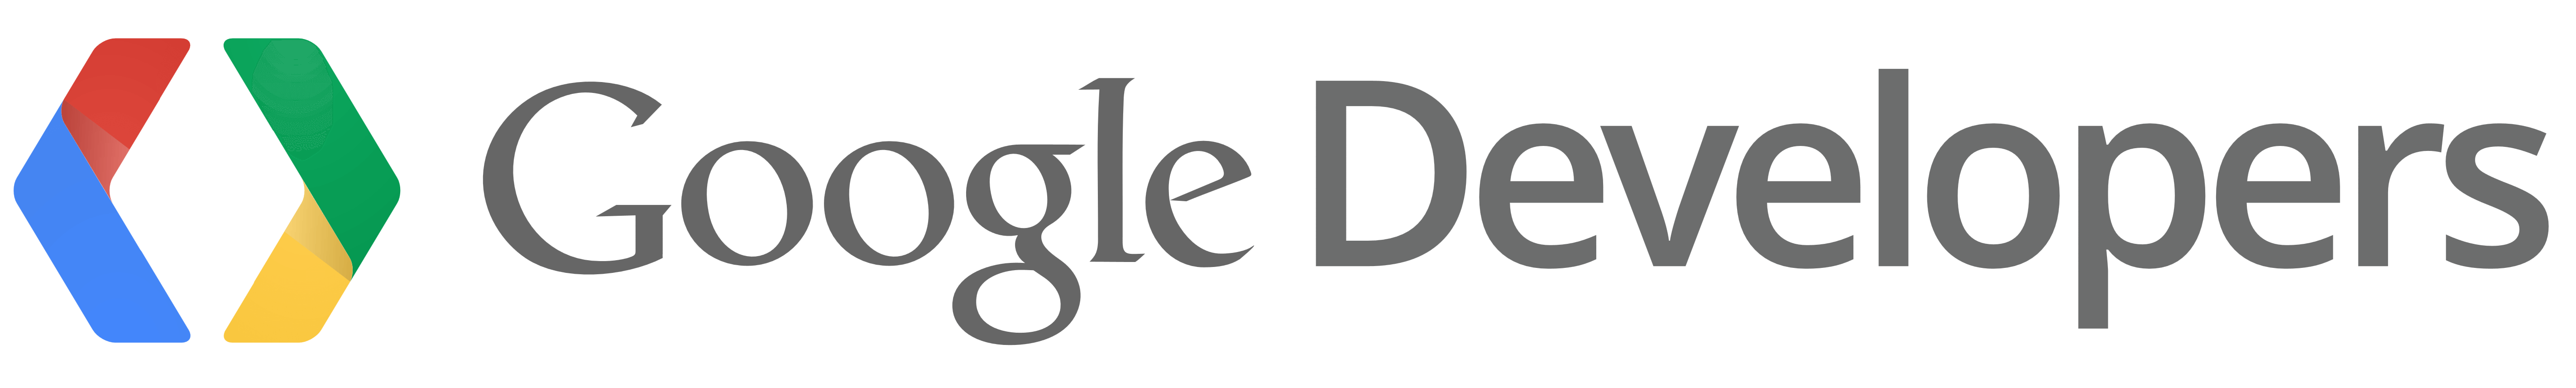 Google Developers logo, logotype